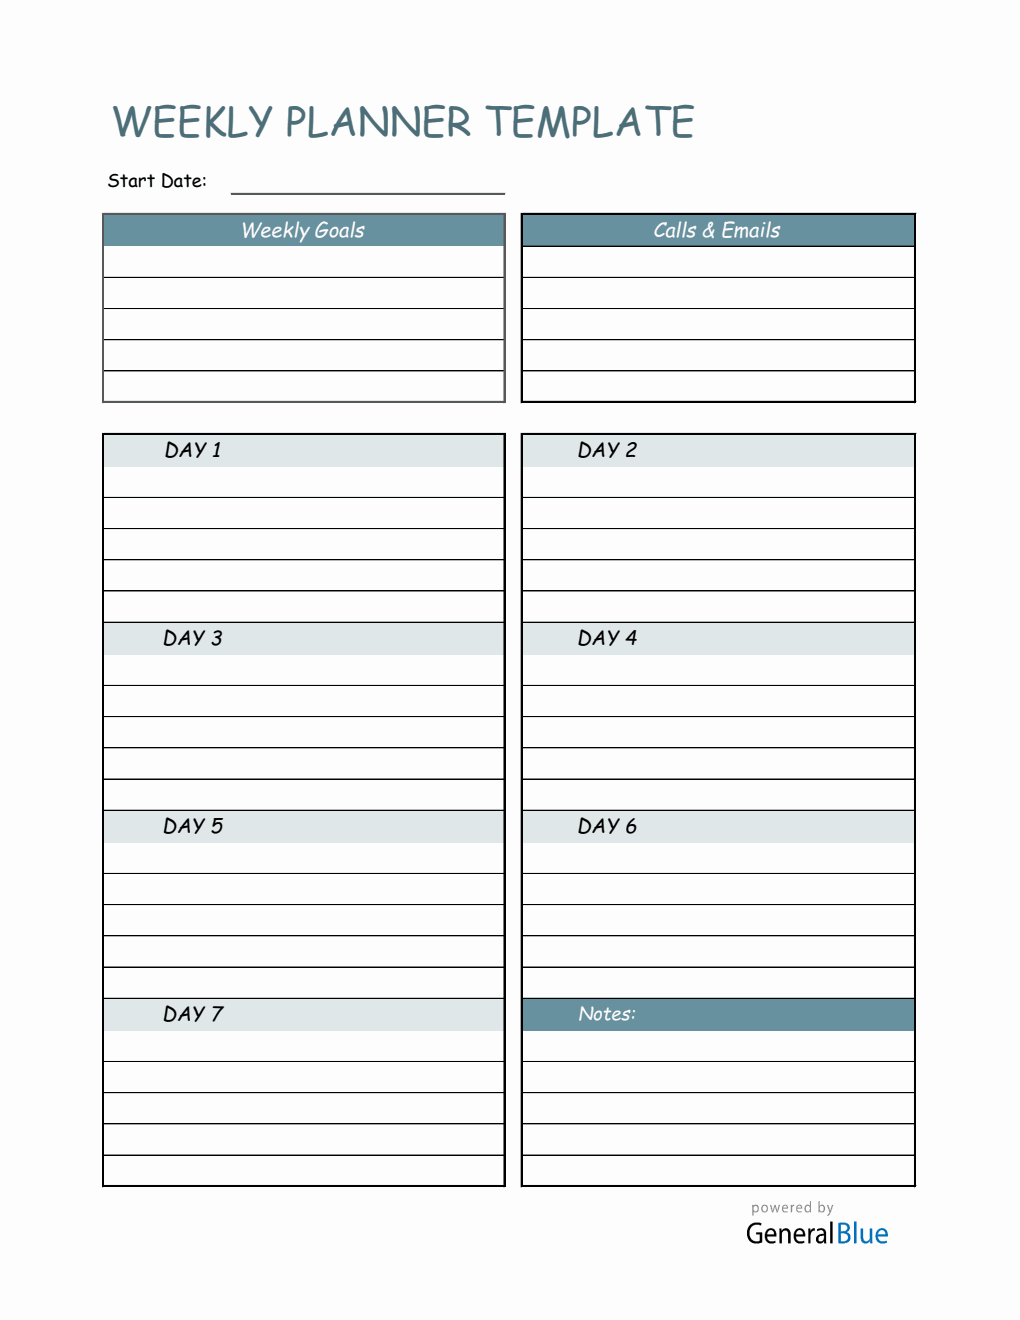 Weekly Planner Template in Excel